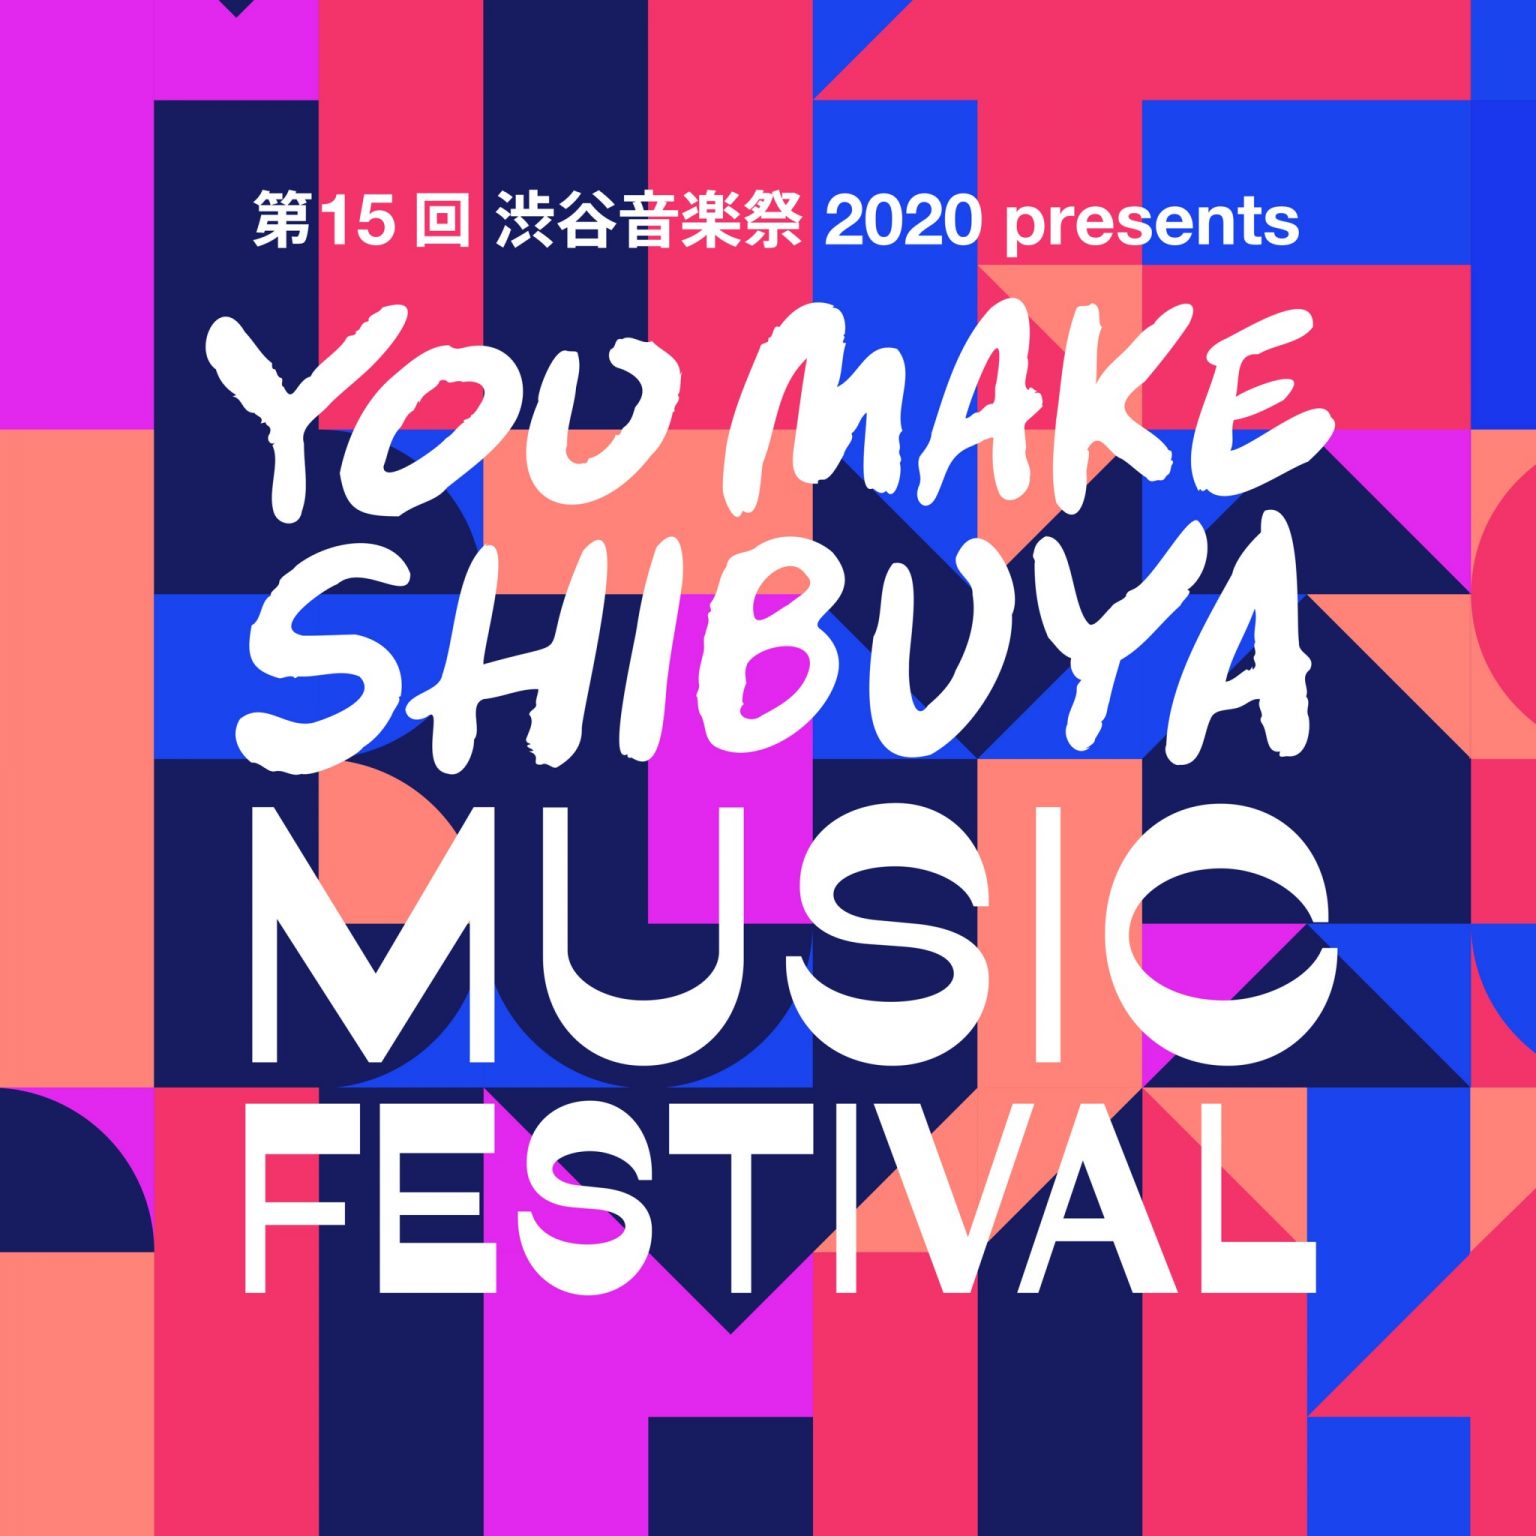 「YOU MAKE SHIBUYA MUSIC FESTIVAL」